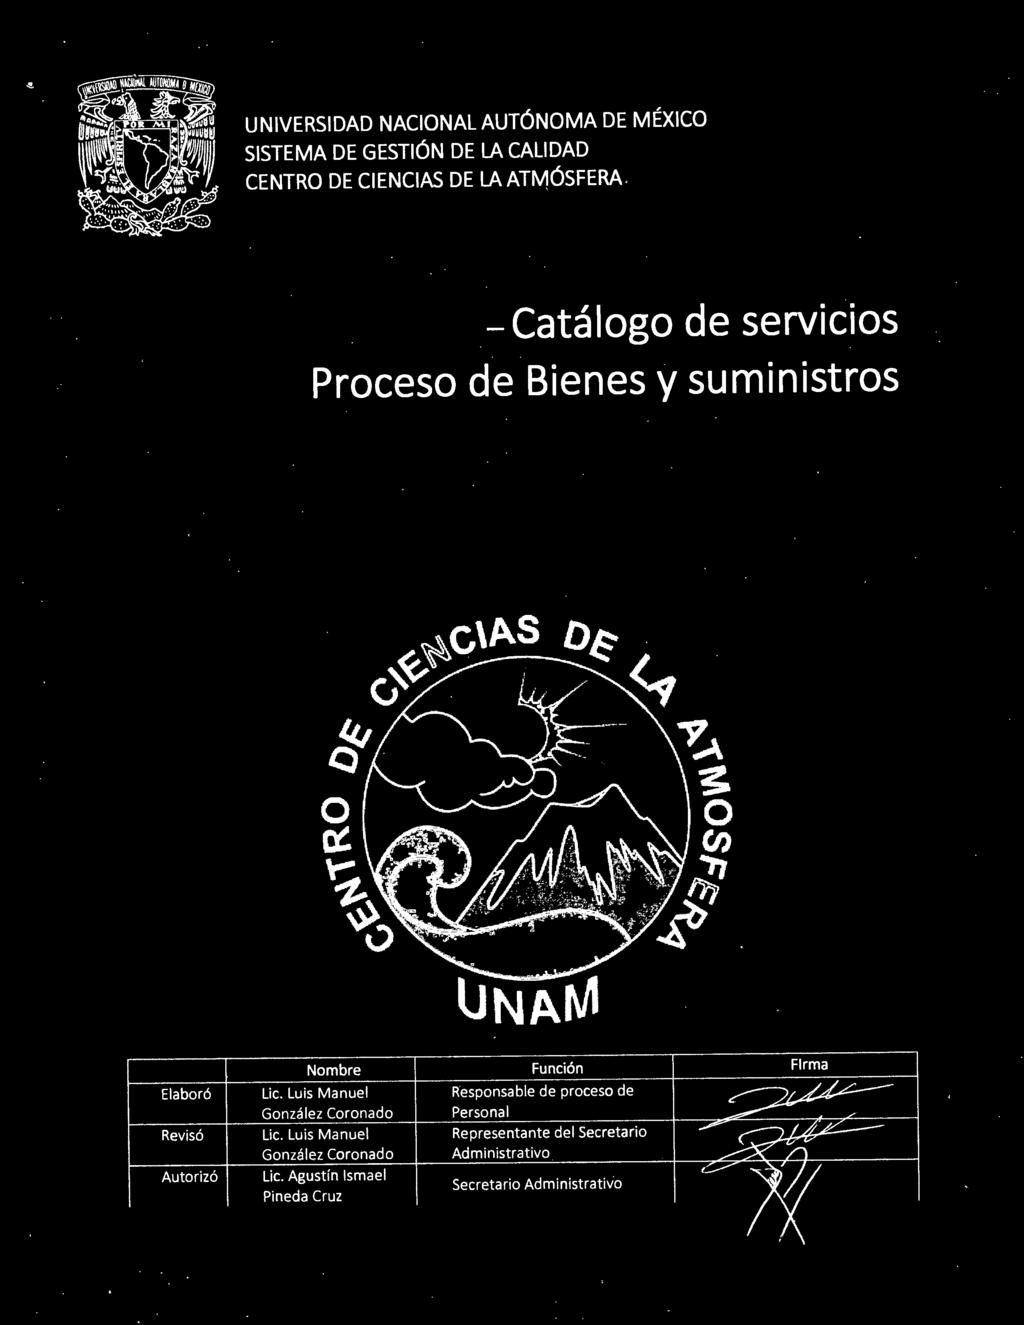 Luis Manuel Responsable de proceso de González Coronado Personal Lic.